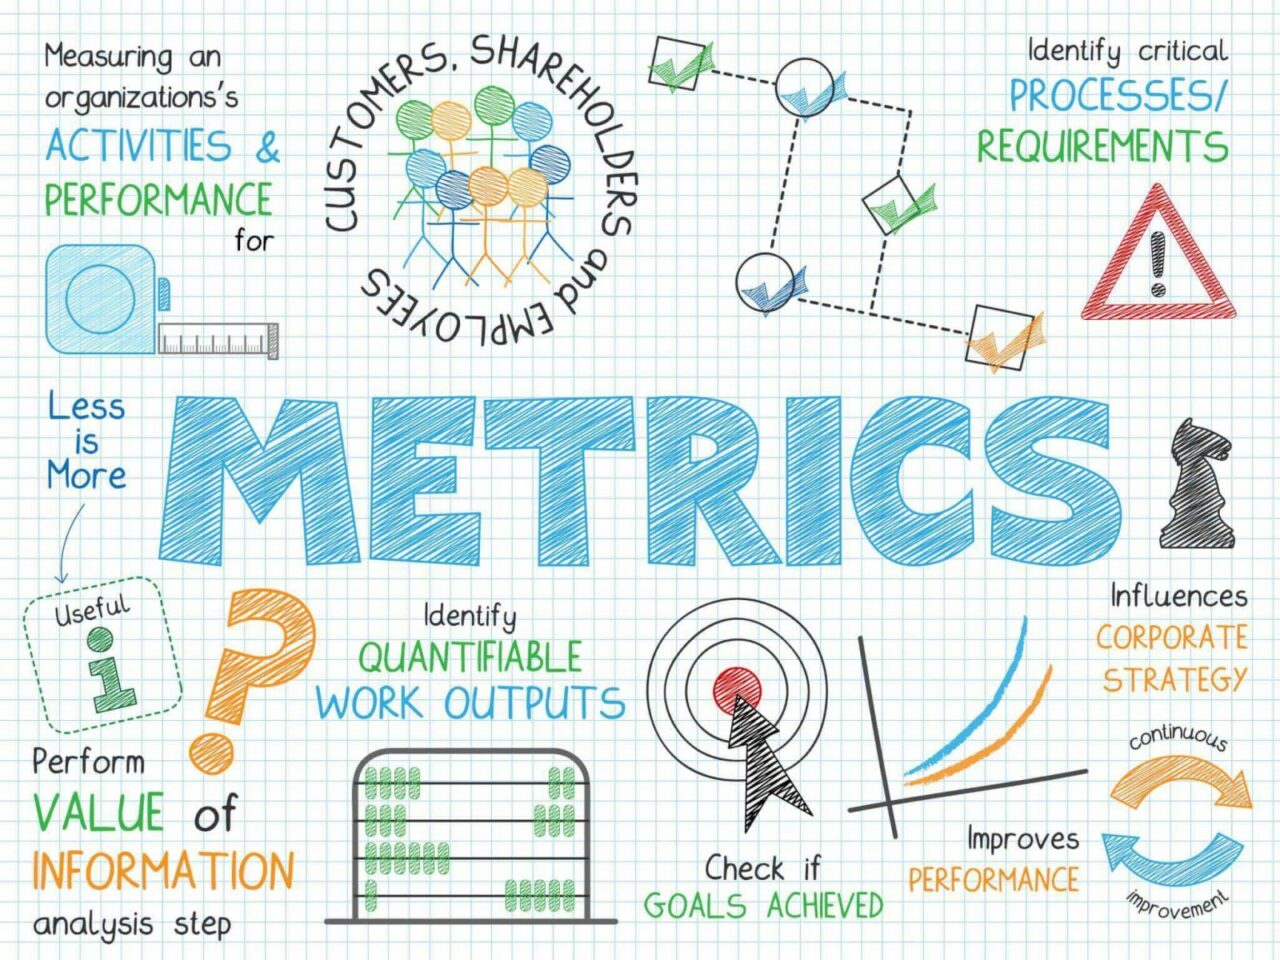 business plan key metrics